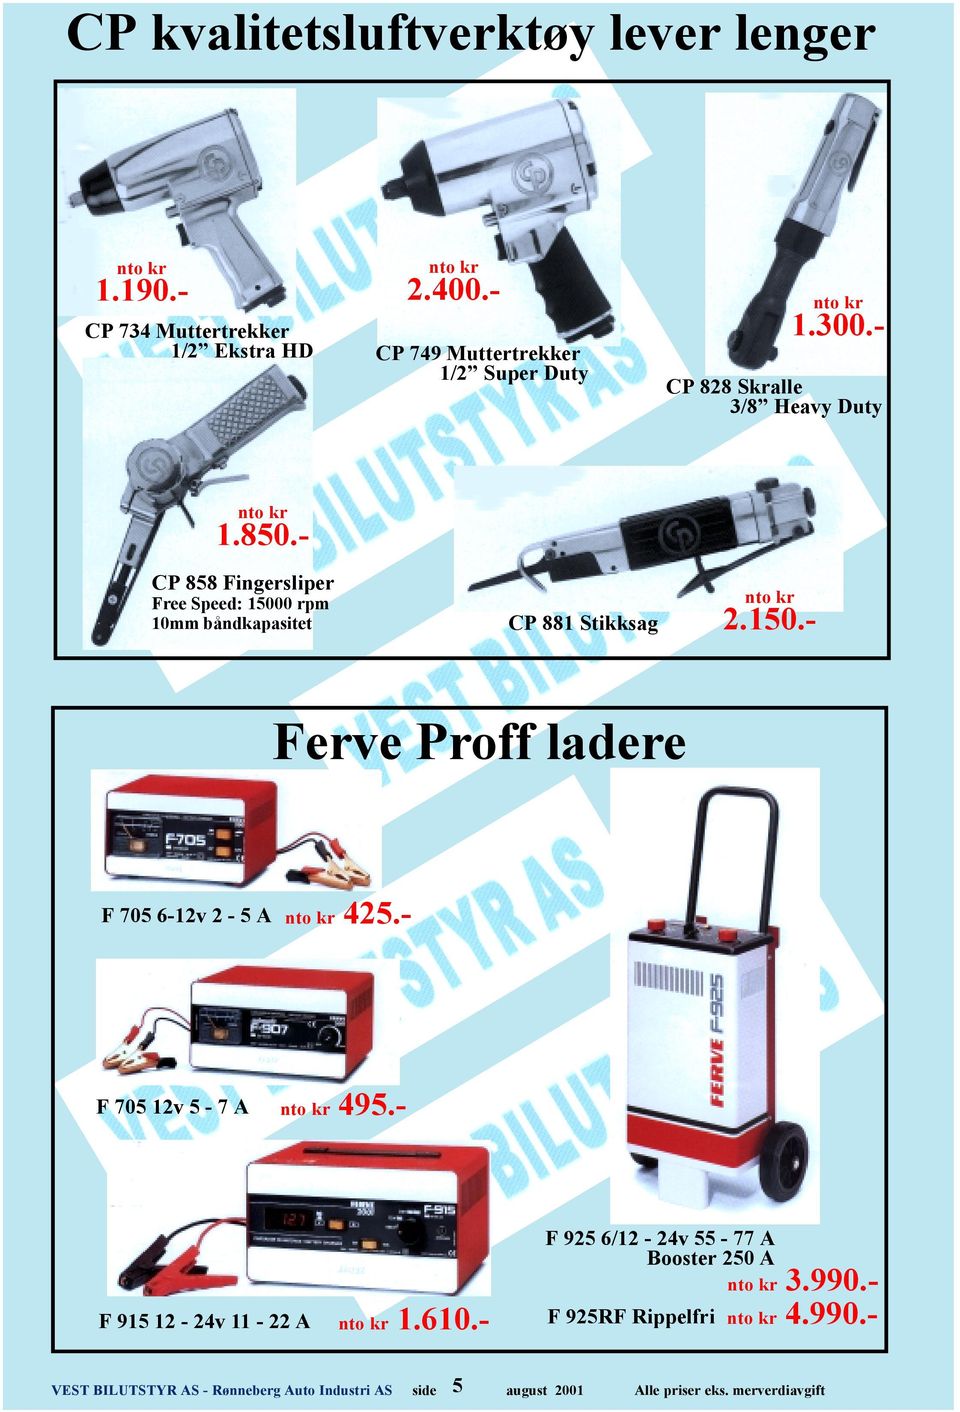 - CP 858 Fingersliper Free Speed: 15000 rpm 10mm båndkapasitet CP 881 Stikksag nto kr 2.150.- Ferve Proff ladere F 705 6-12v 2-5 A nto kr 425.